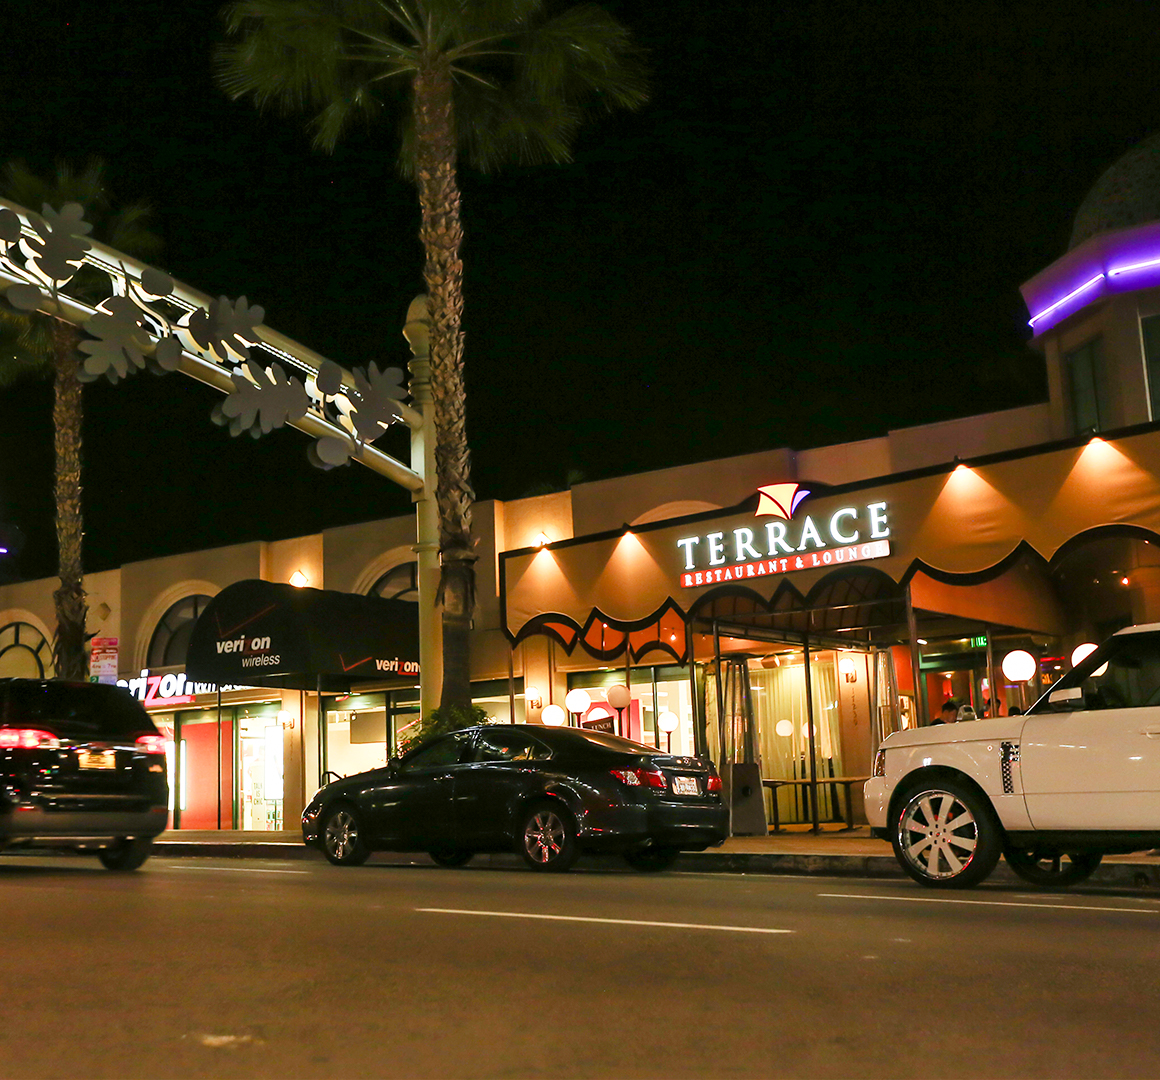 Terrace Restaurant at Encino Entrance